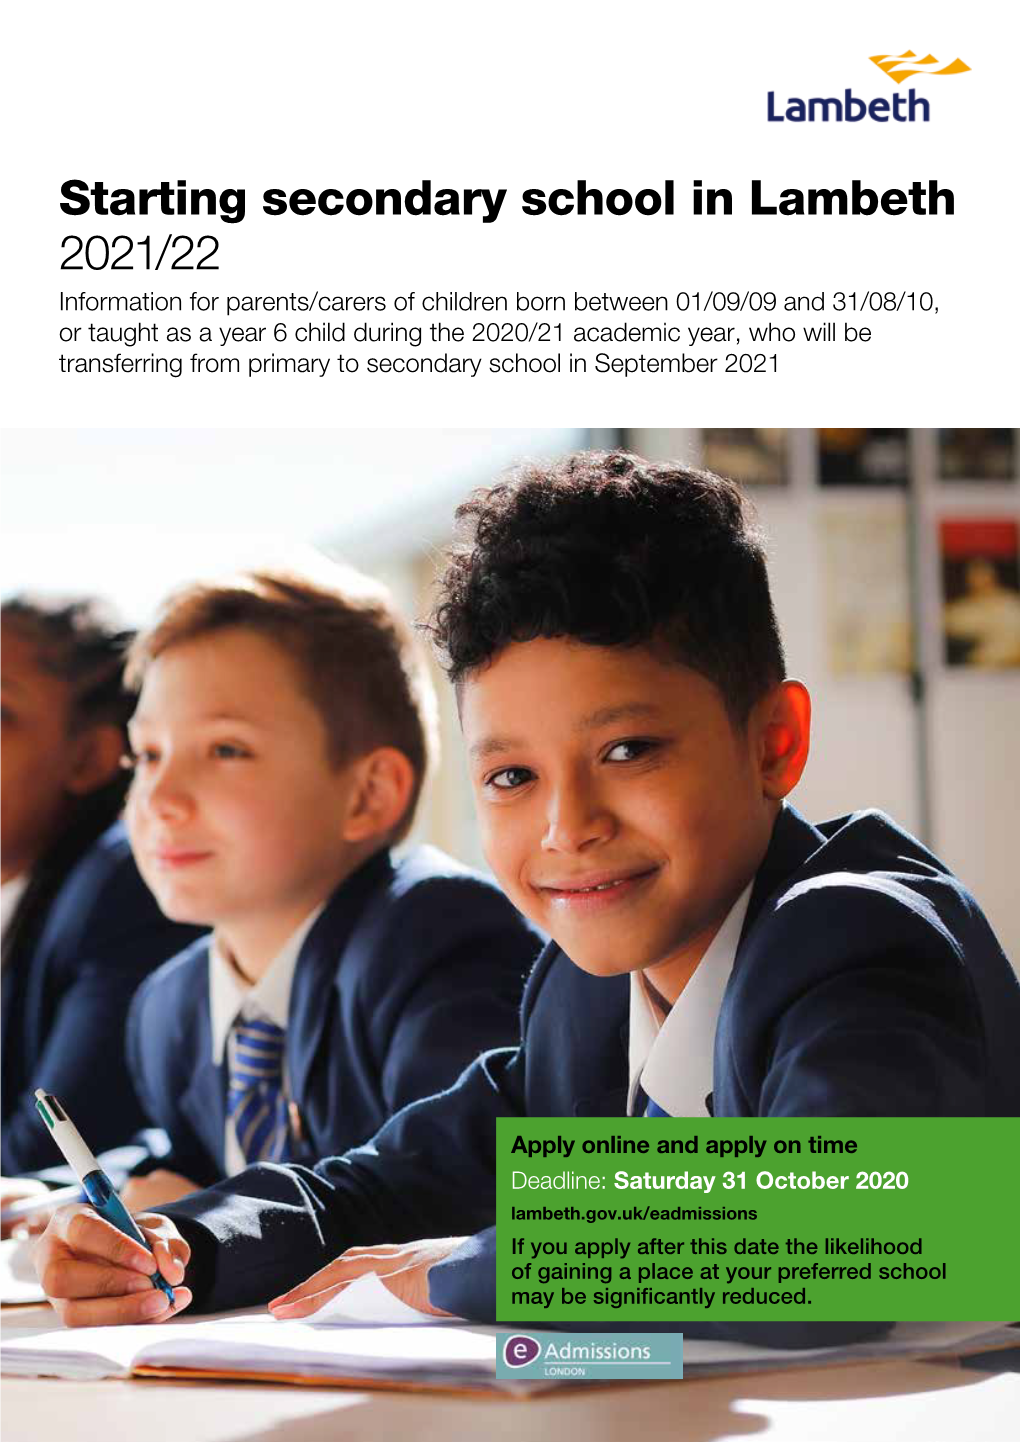 Starting Secondary School in Lambeth 2021/22